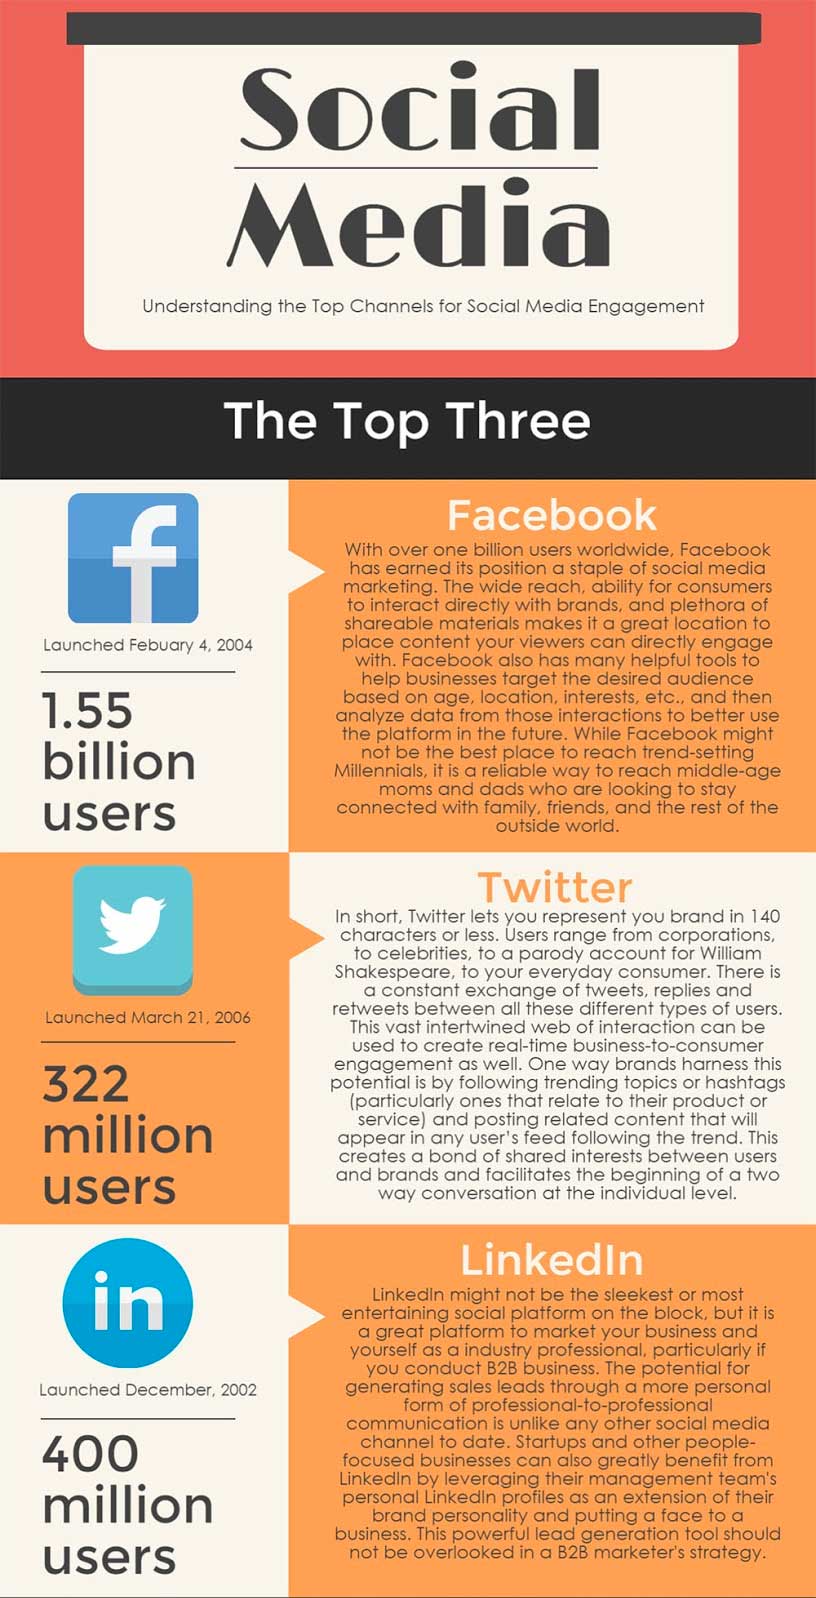 social media infographic